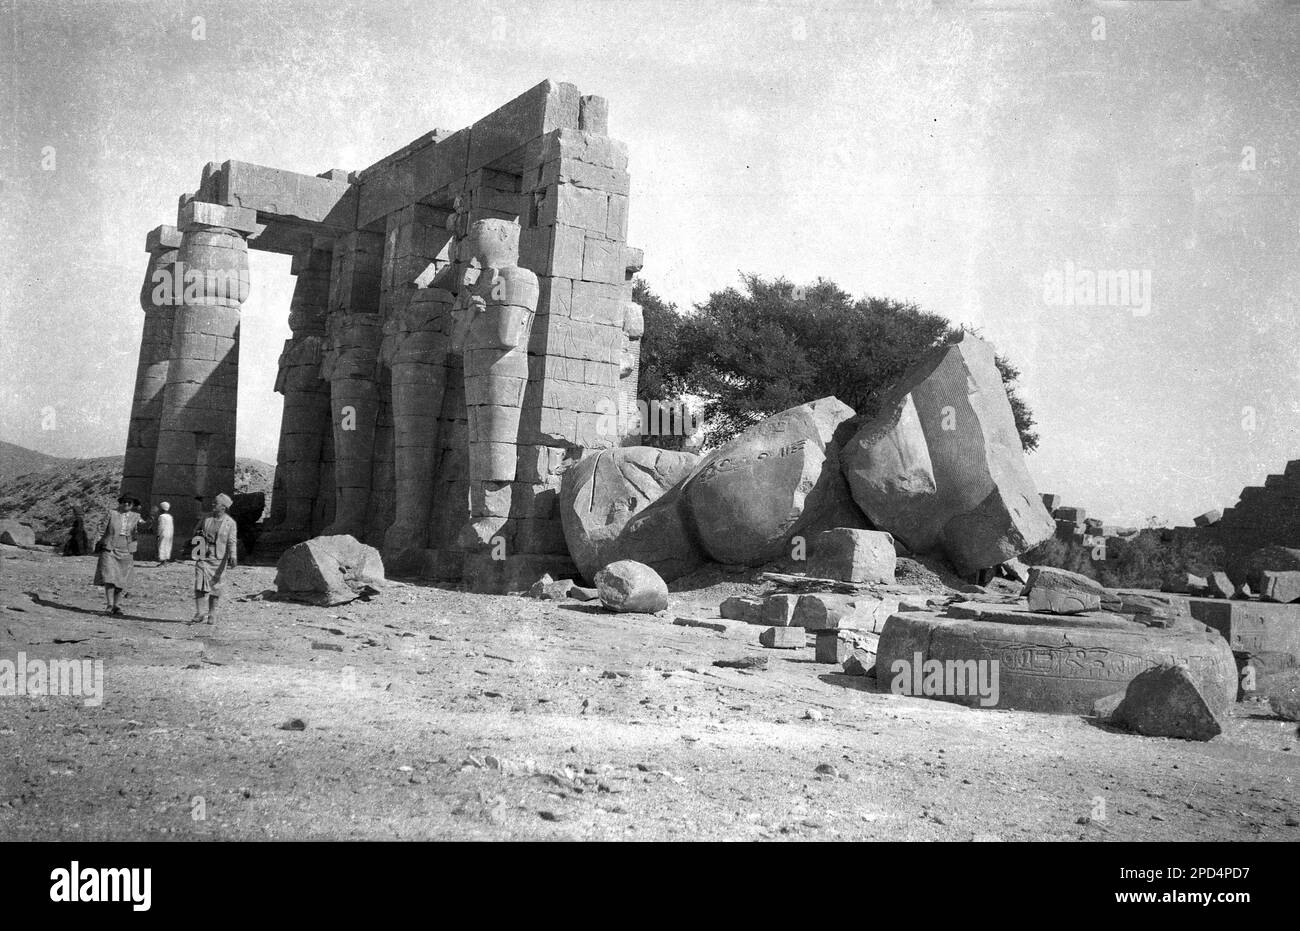 circa 1940s, historical, ancient ruins, Temple of Zarnak, Luxor, Egypt. Stock Photo